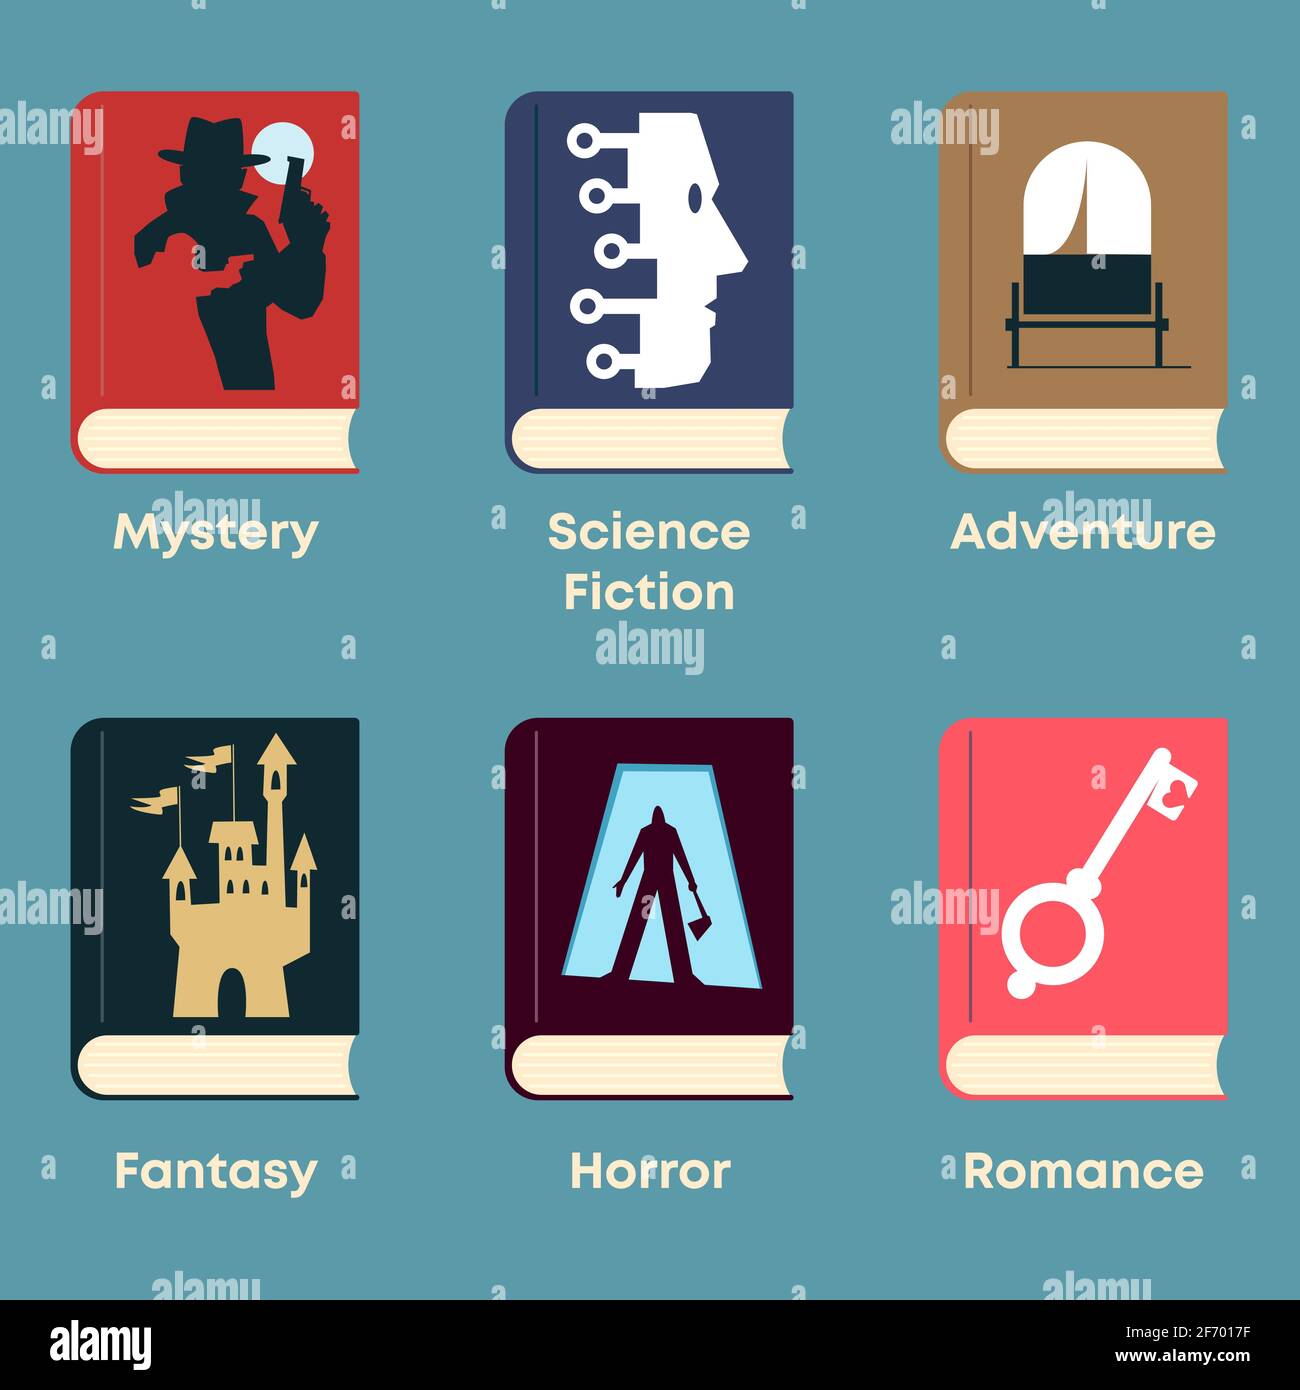 Liste der Genres der Belletristik. Bücherset mit Themen-Cover: Mystery, Science Fiction, Adventure, Fantasy, Horror, Romantik. Stock Vektor